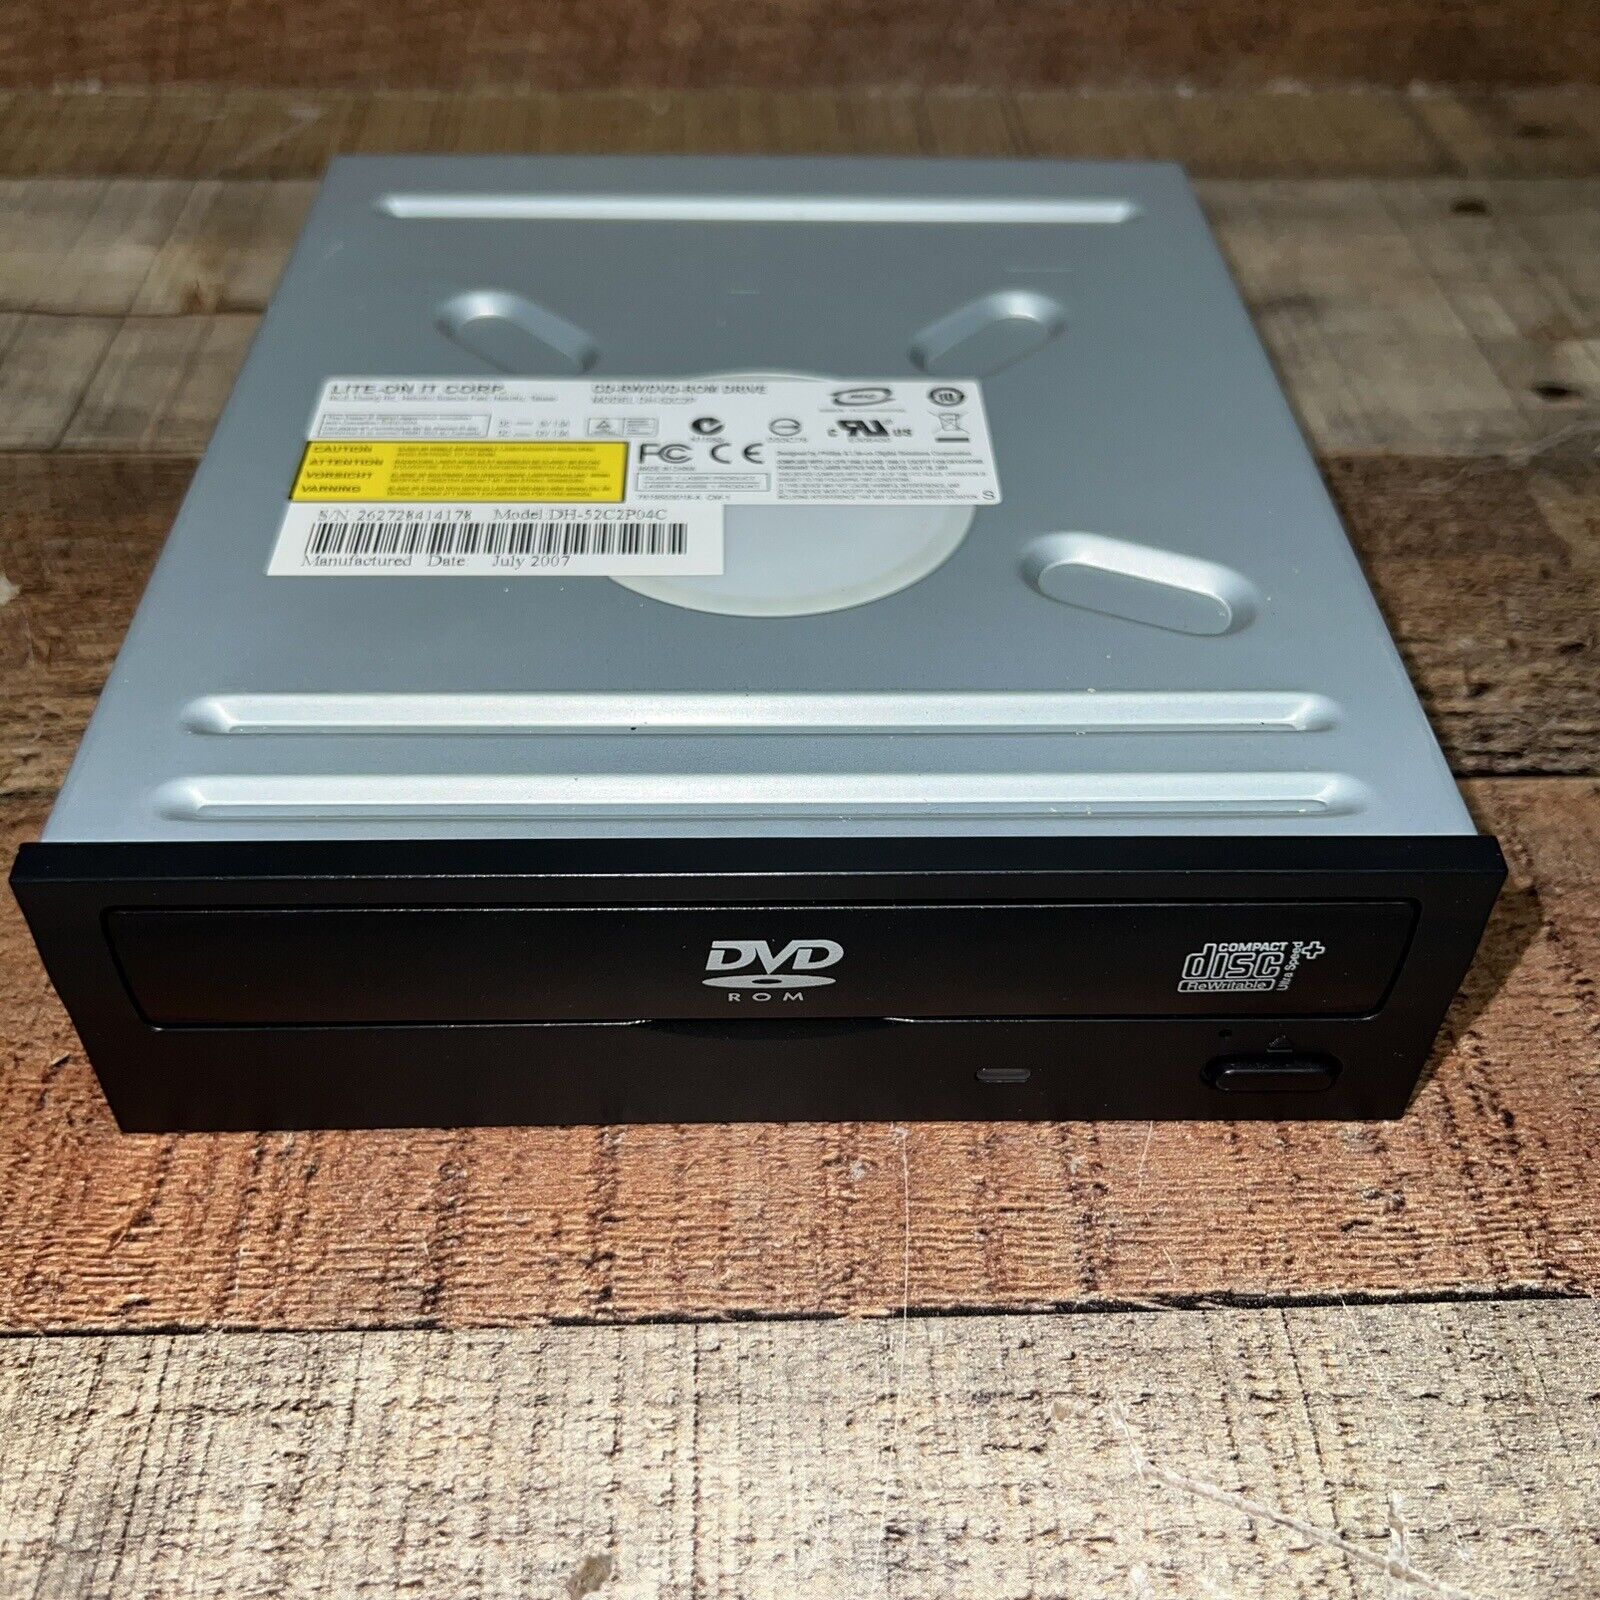 Lite-On-It Corp CD/DVD rewriter, model DH52C2P